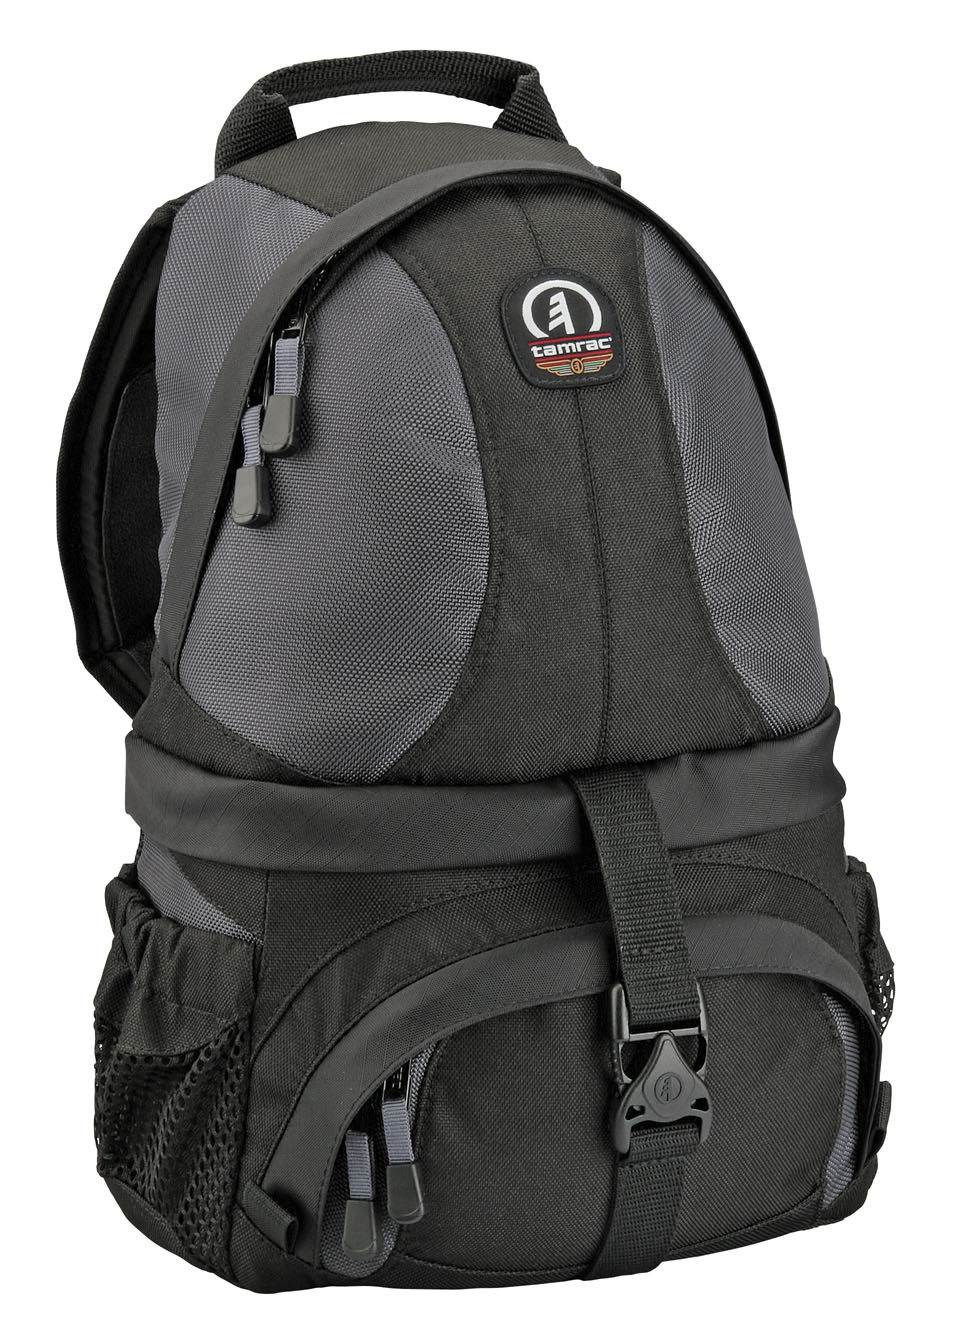 Tamrac 5546 ADVENTURE 6 Backpack